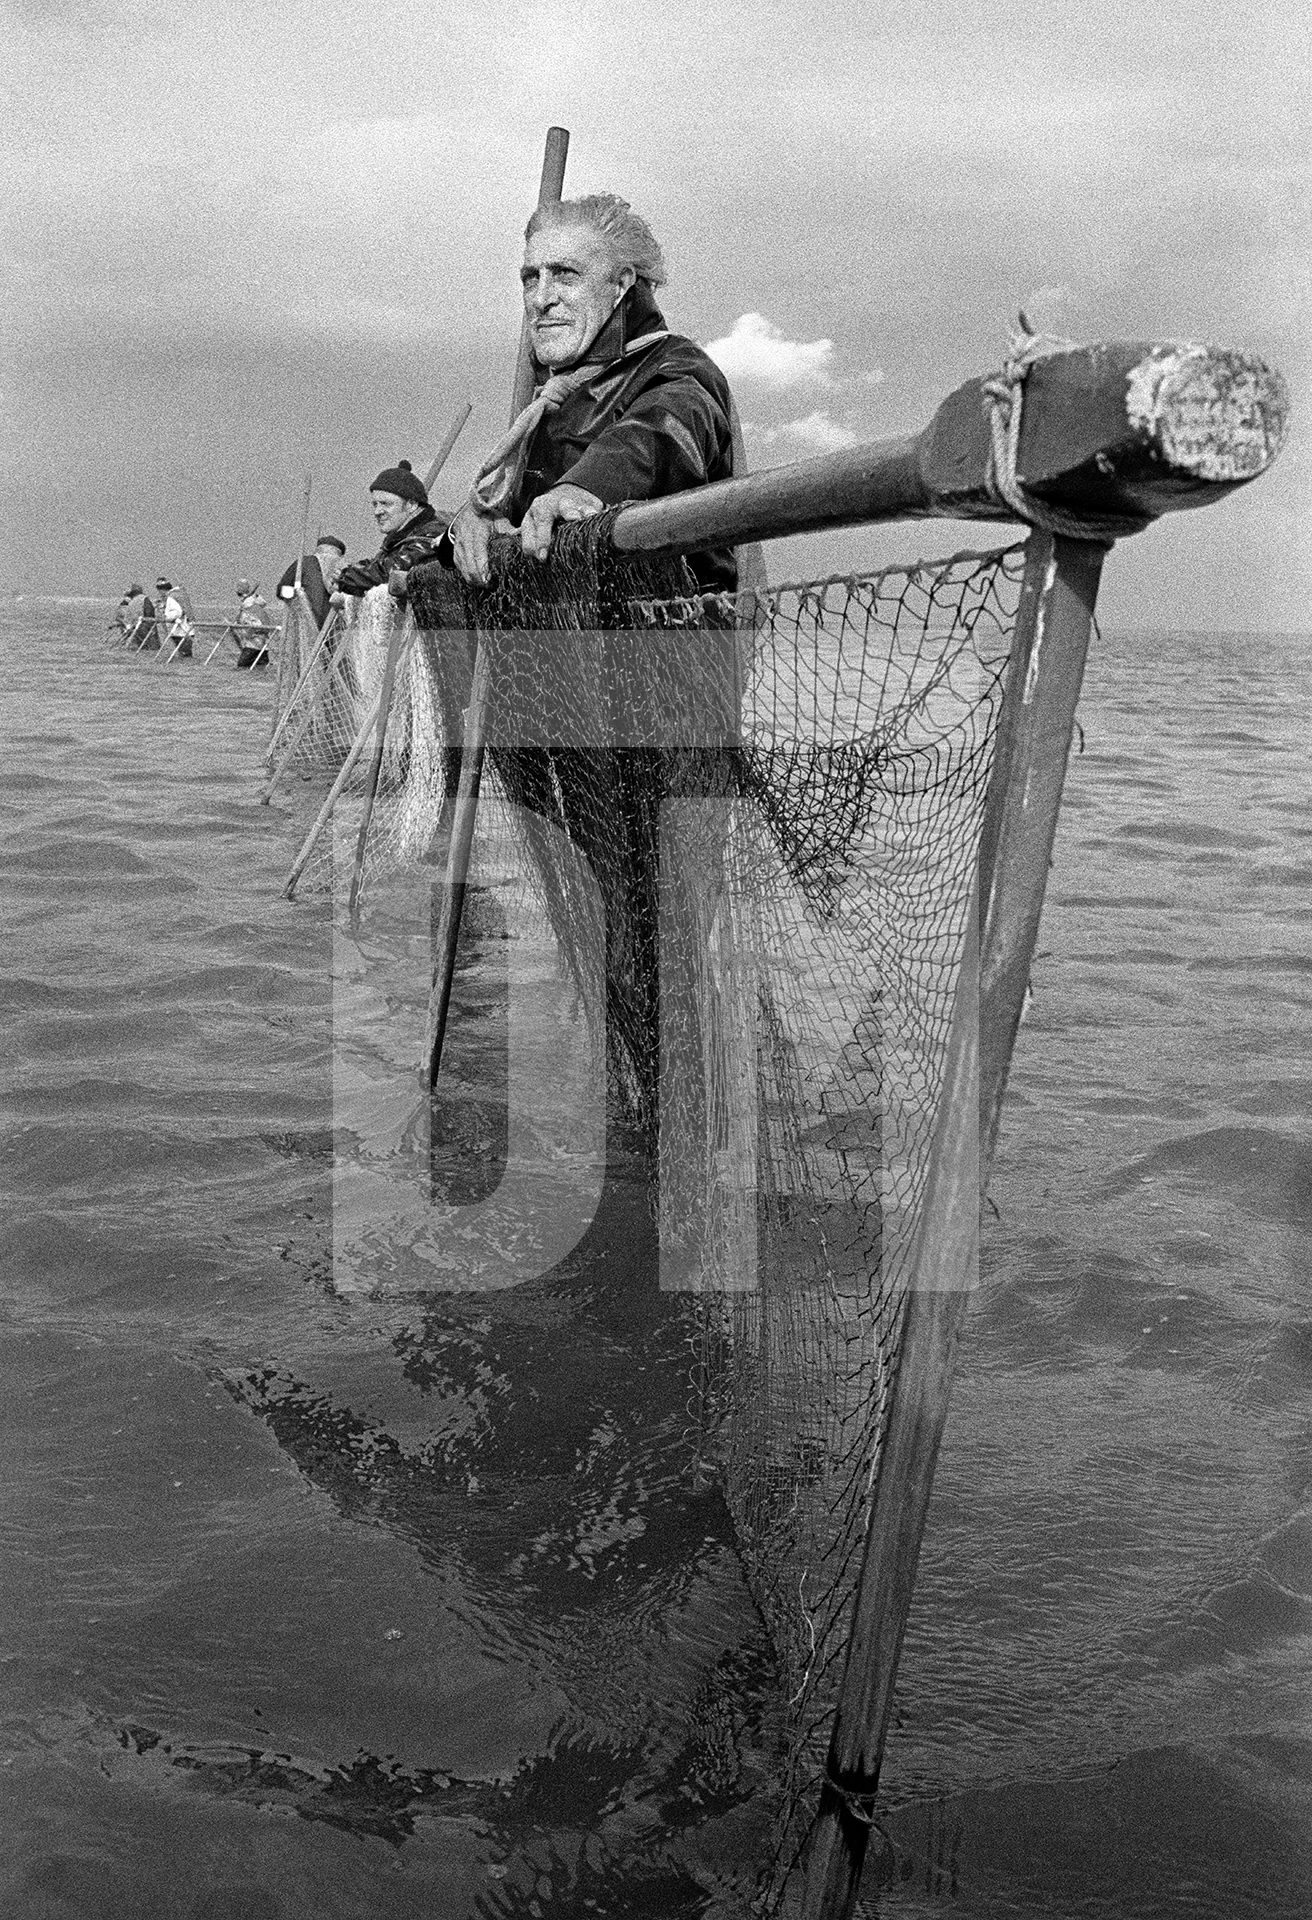 Haafnet fishing, near Port Carlisle, Bowness-on-Solway. September 1974 by Daniel Meadows